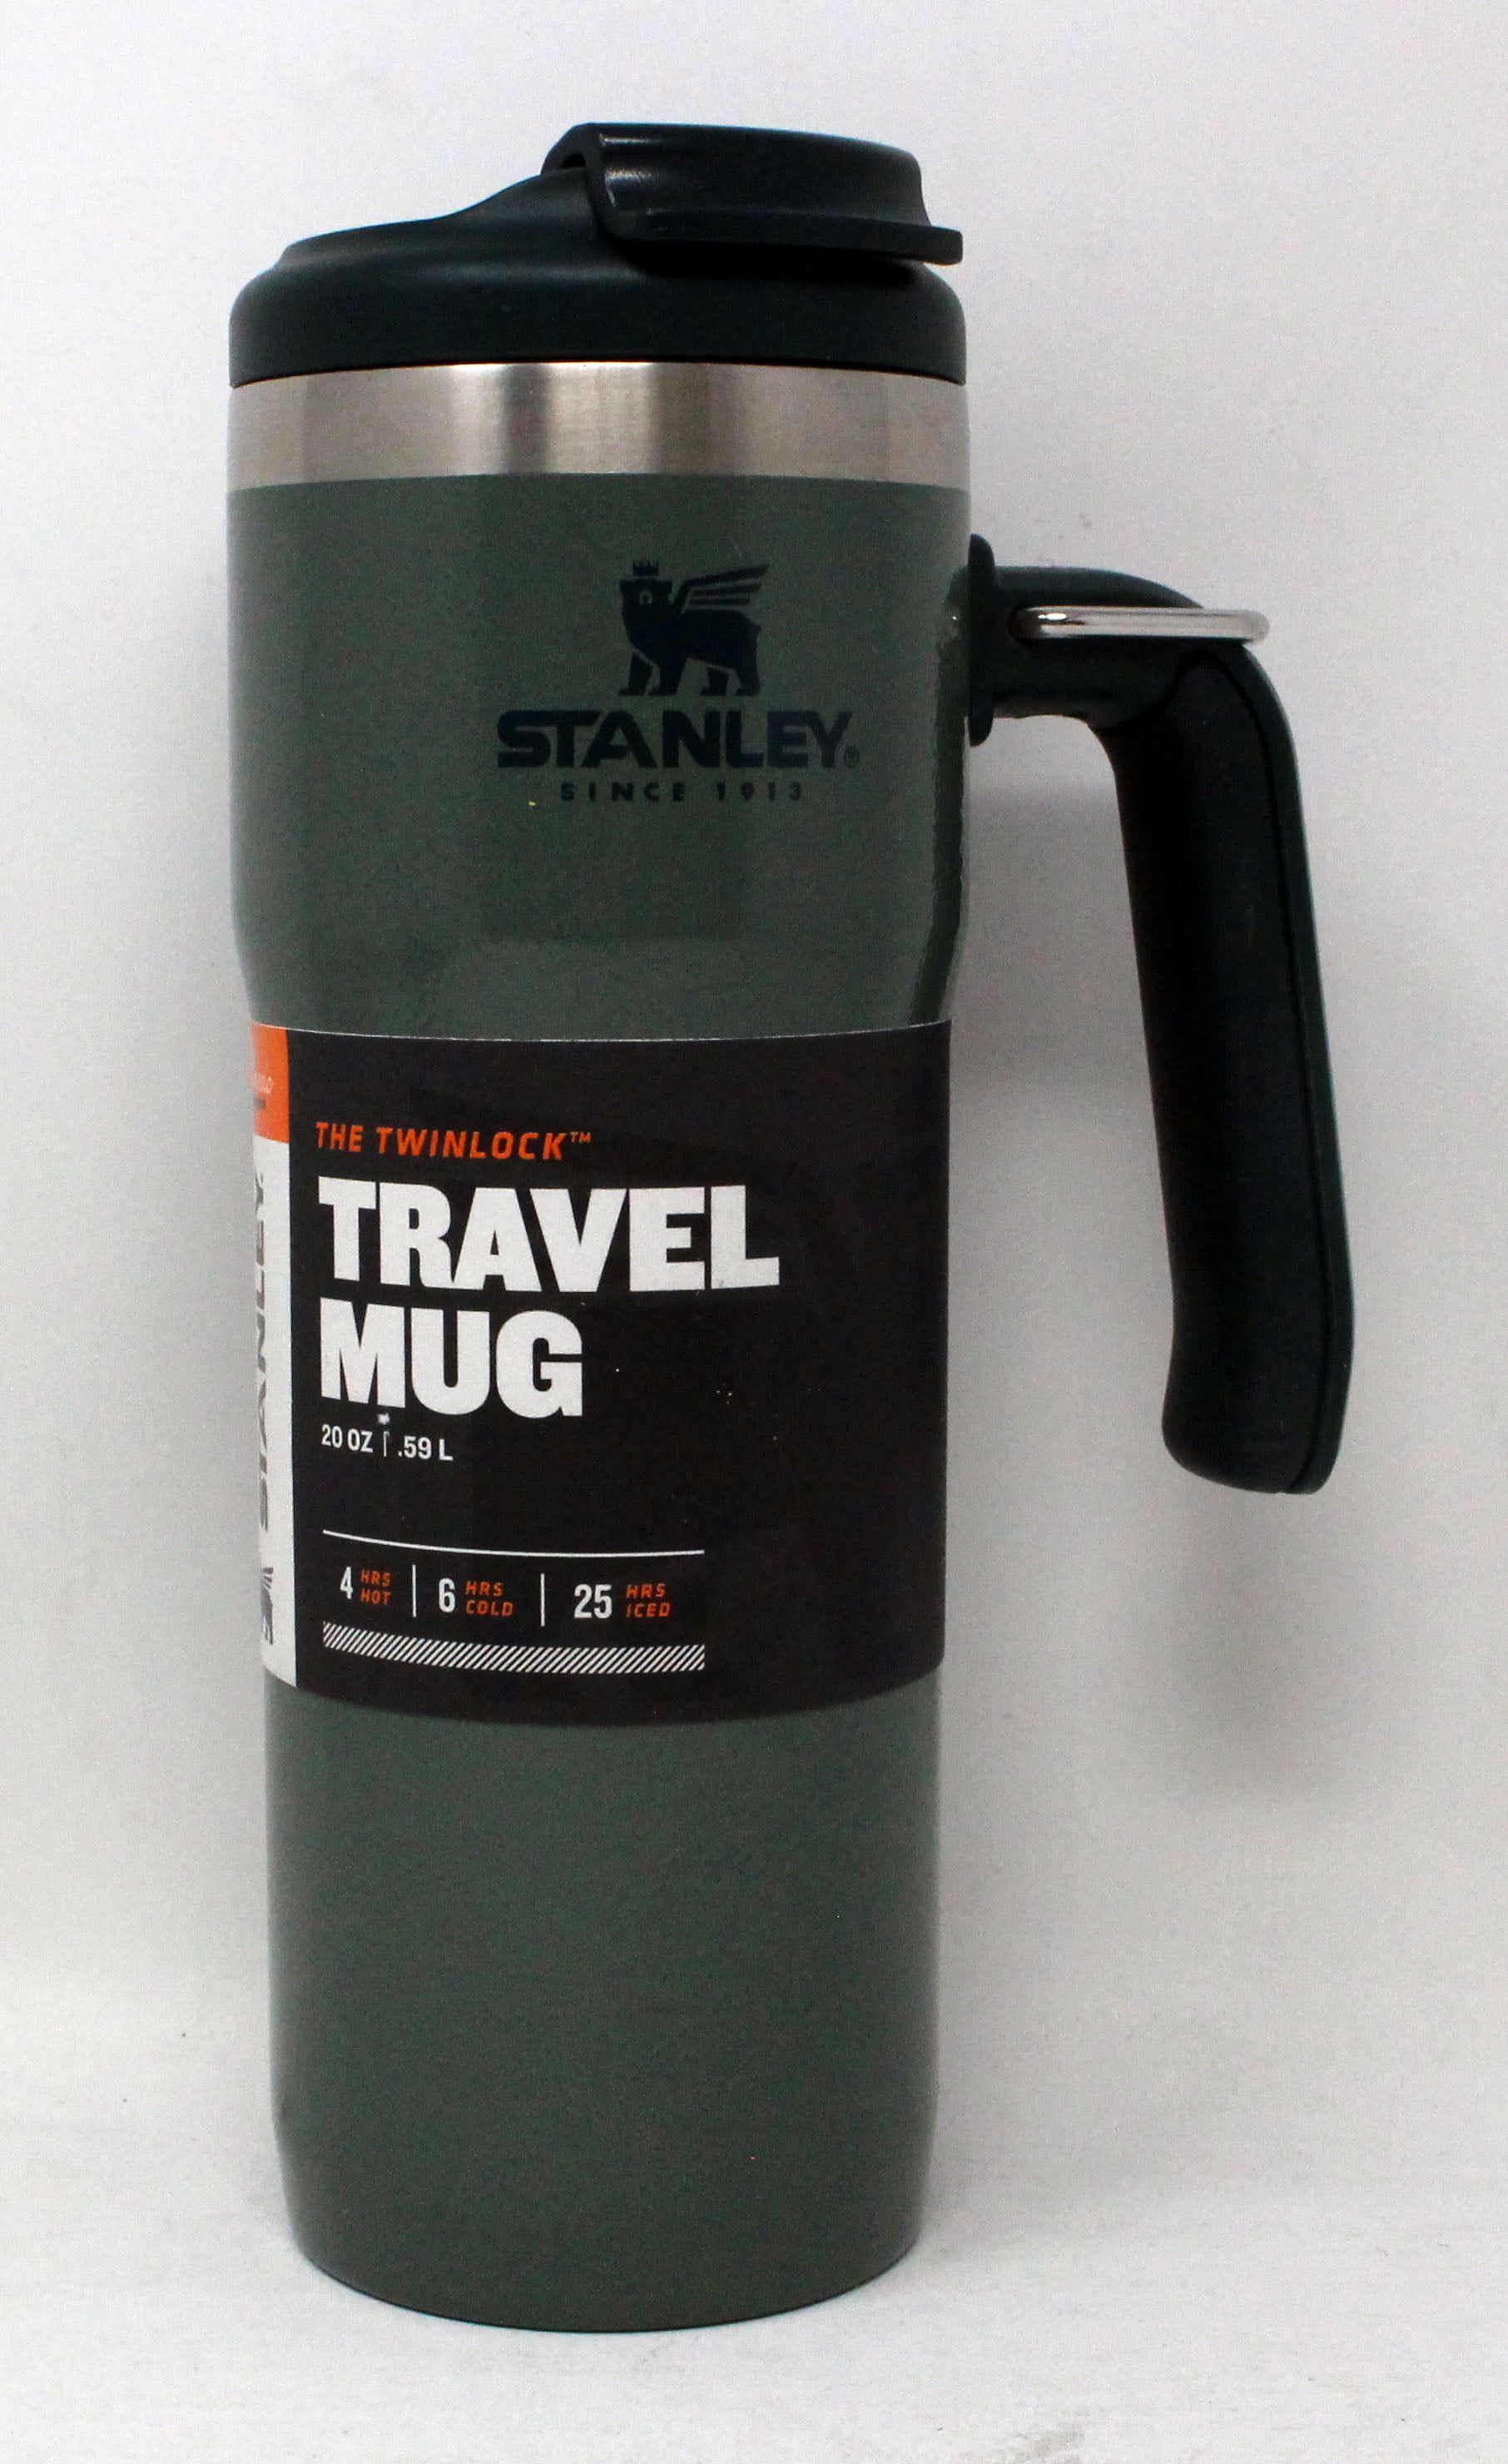 Thomann Travel Coffee Mug – Thomann United States